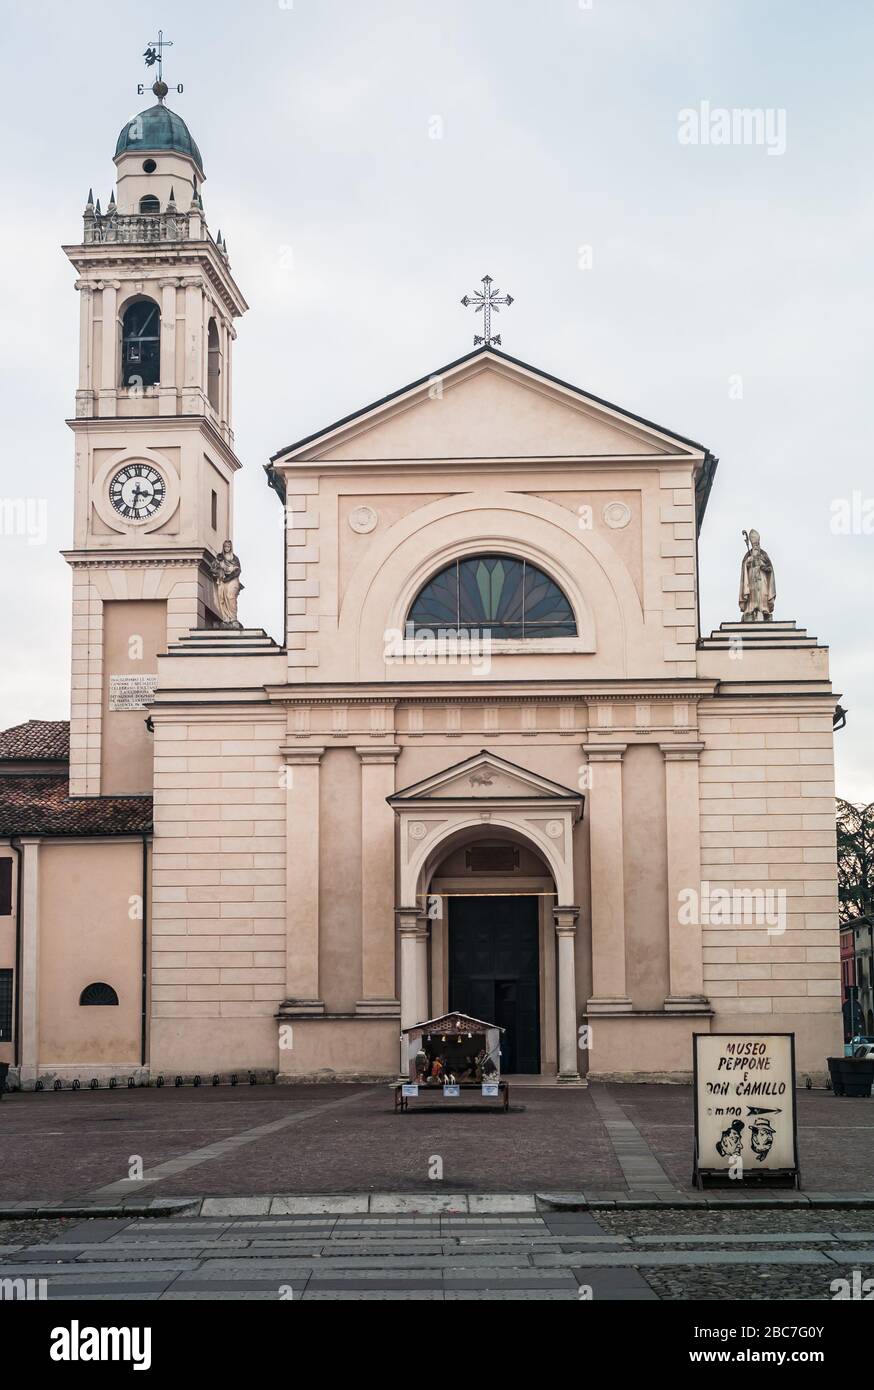 Brescello, Italy - January 1 2014: Church of Santa Maria Nascente on Piazza Matteotti in Brescello, the Parish of the famous Movie Character Don Camil Stock Photo